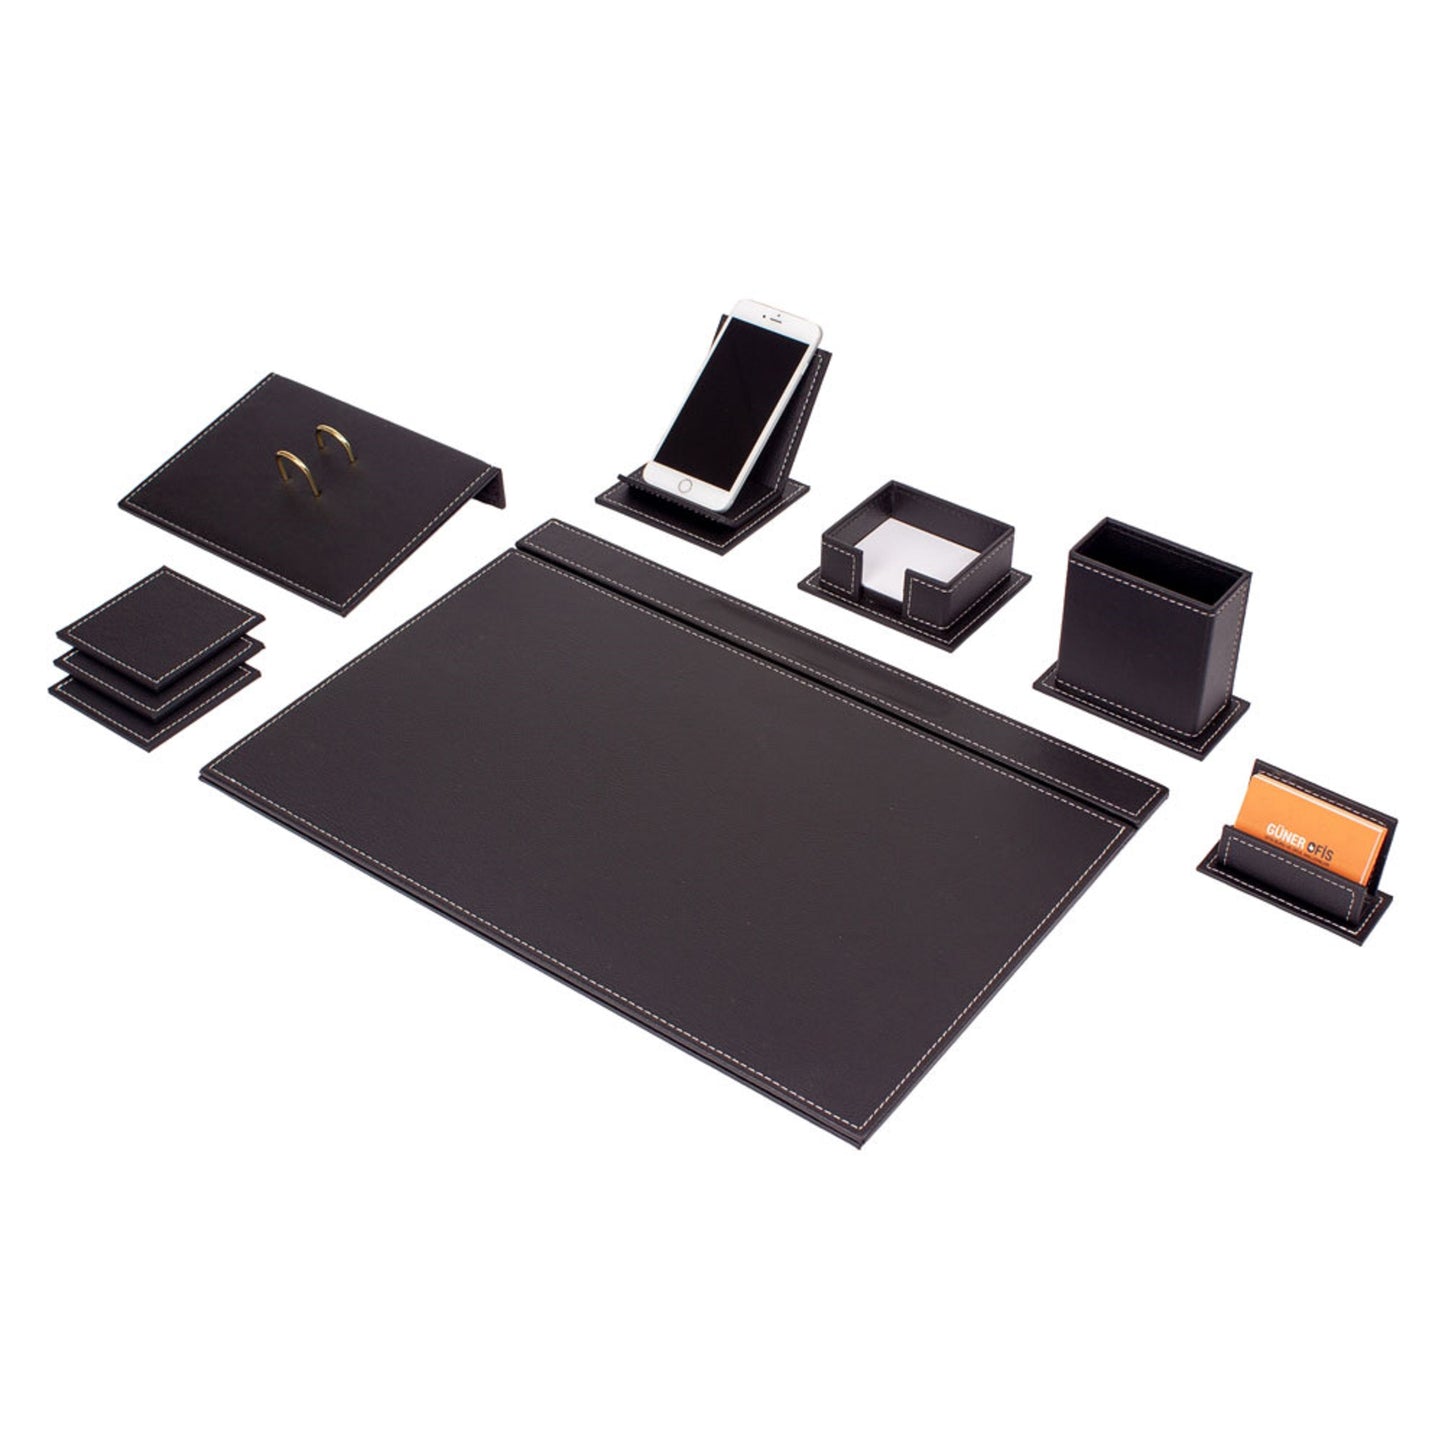 MOOG 9 Pieces Luxury Desk Set -Desk Office Accessories-Storage-Desk Organizers And Accessories-Office Desk Accessories-Desk Organizer Set-Desk Pads & Blotters - 9 PCS